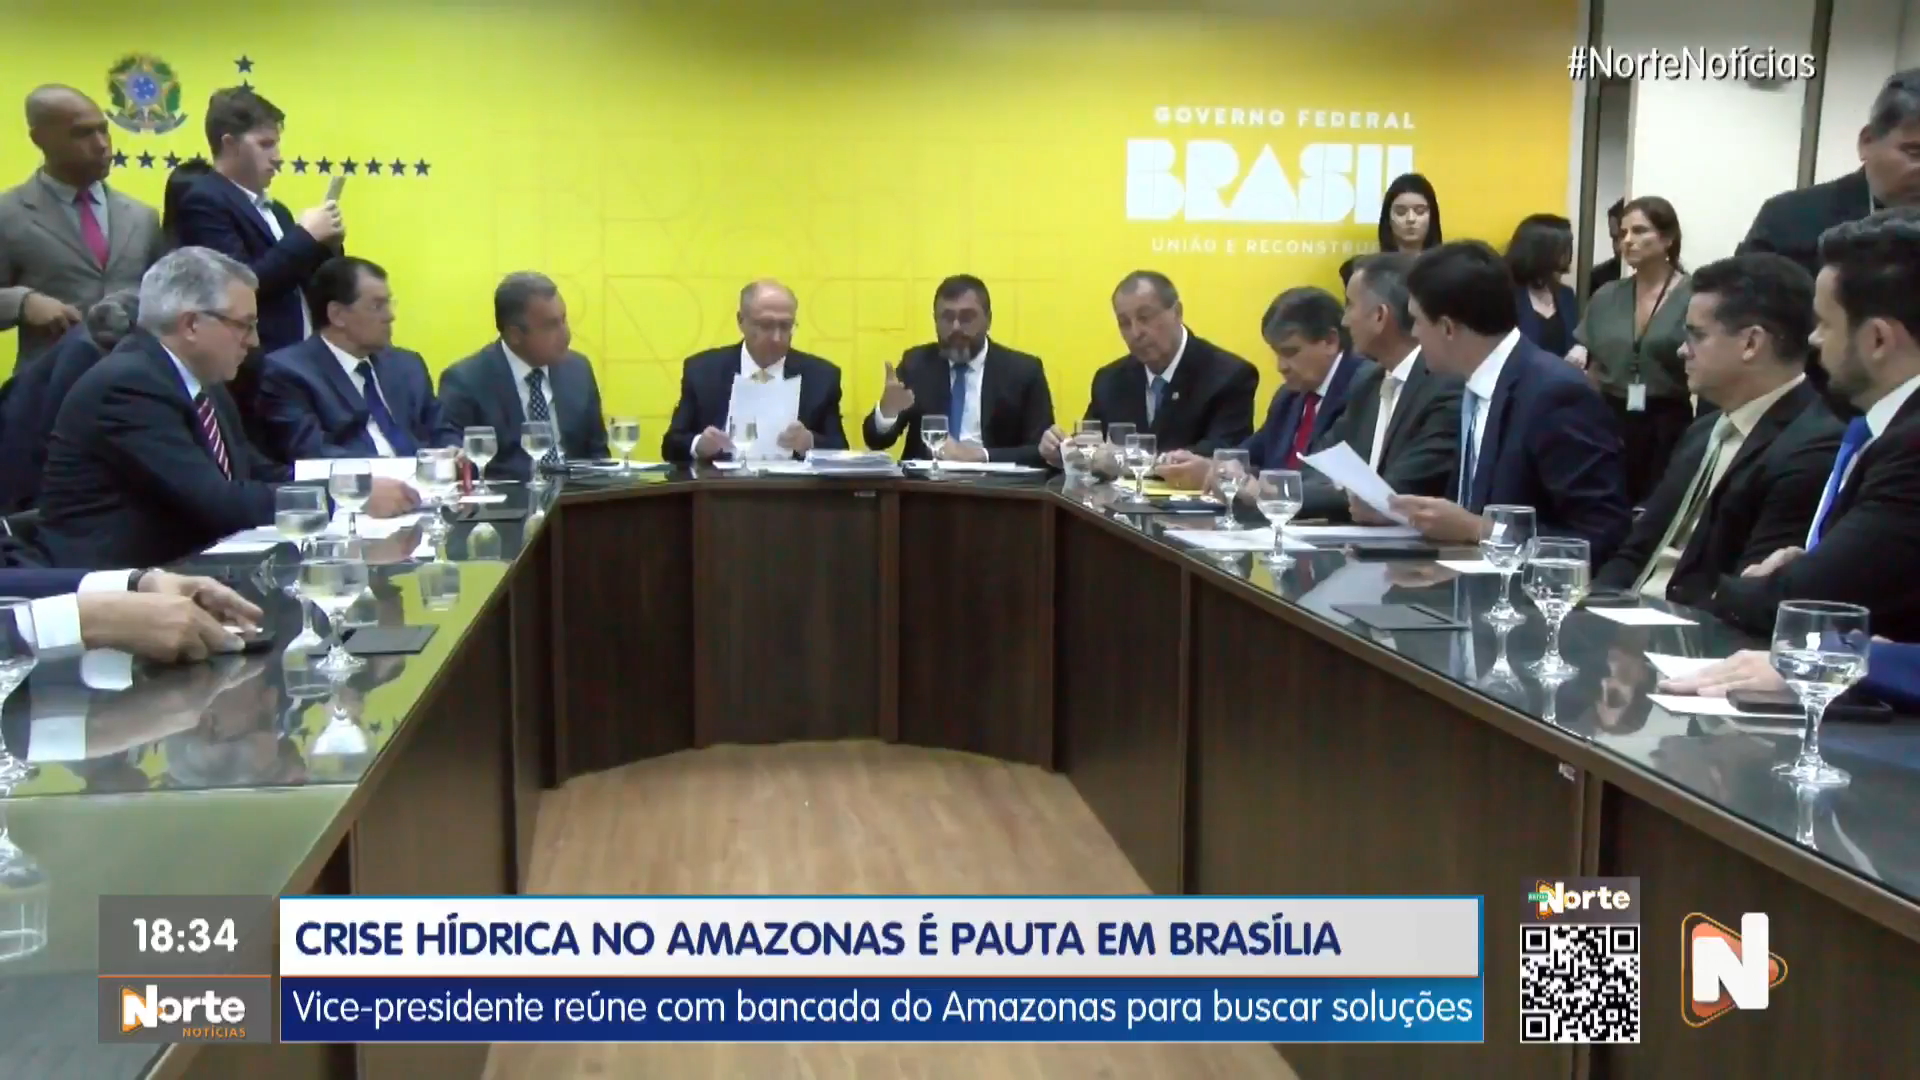 VÍDEO: crise hídrica no Amazonas é pauta em Brasília